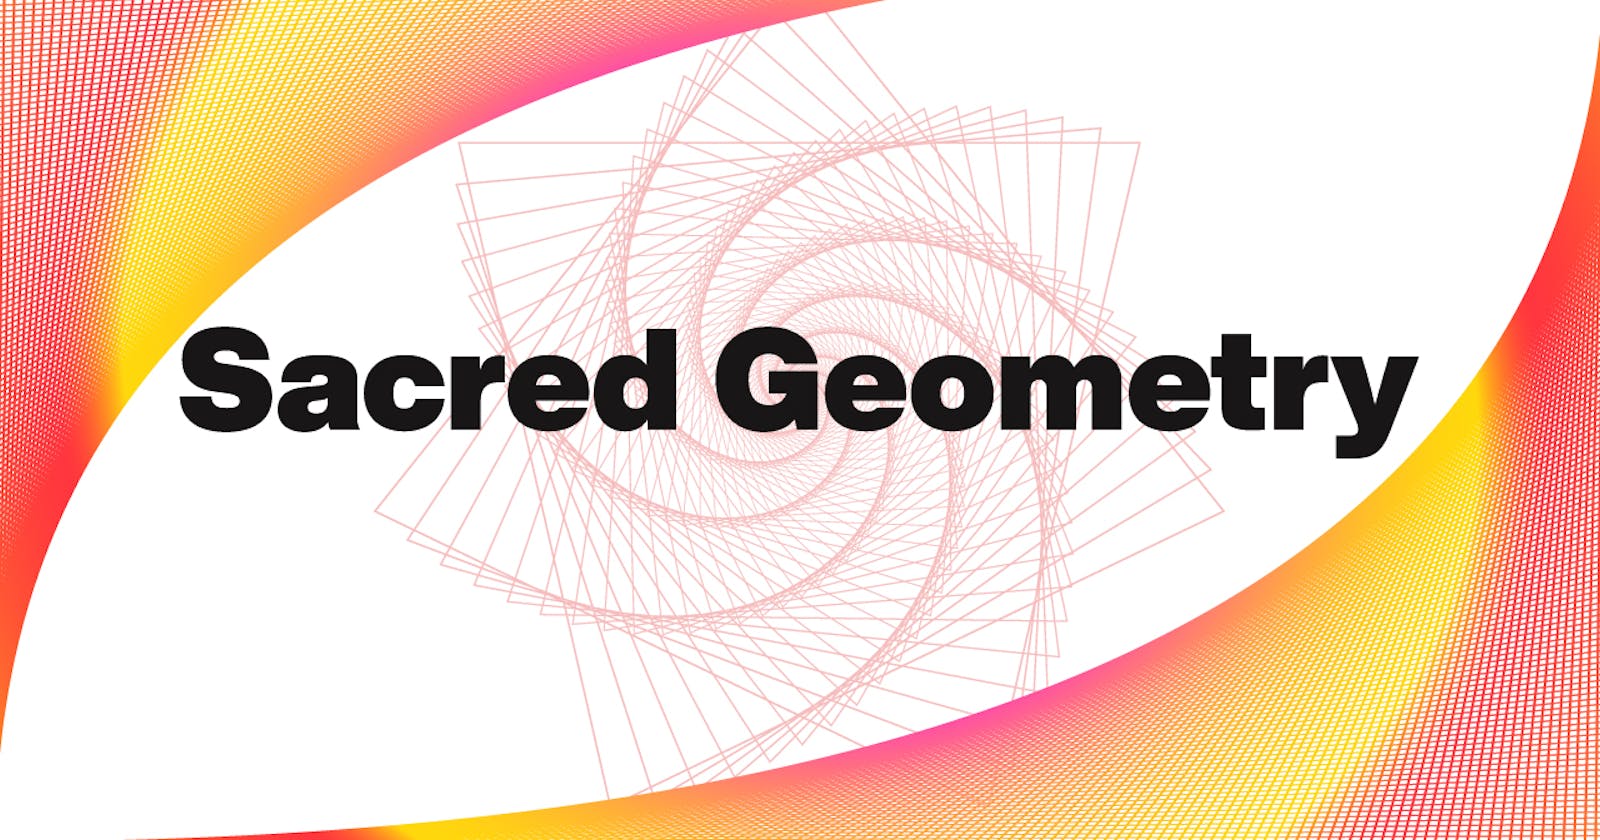 Sacred Geometry with Adobe Illustrator